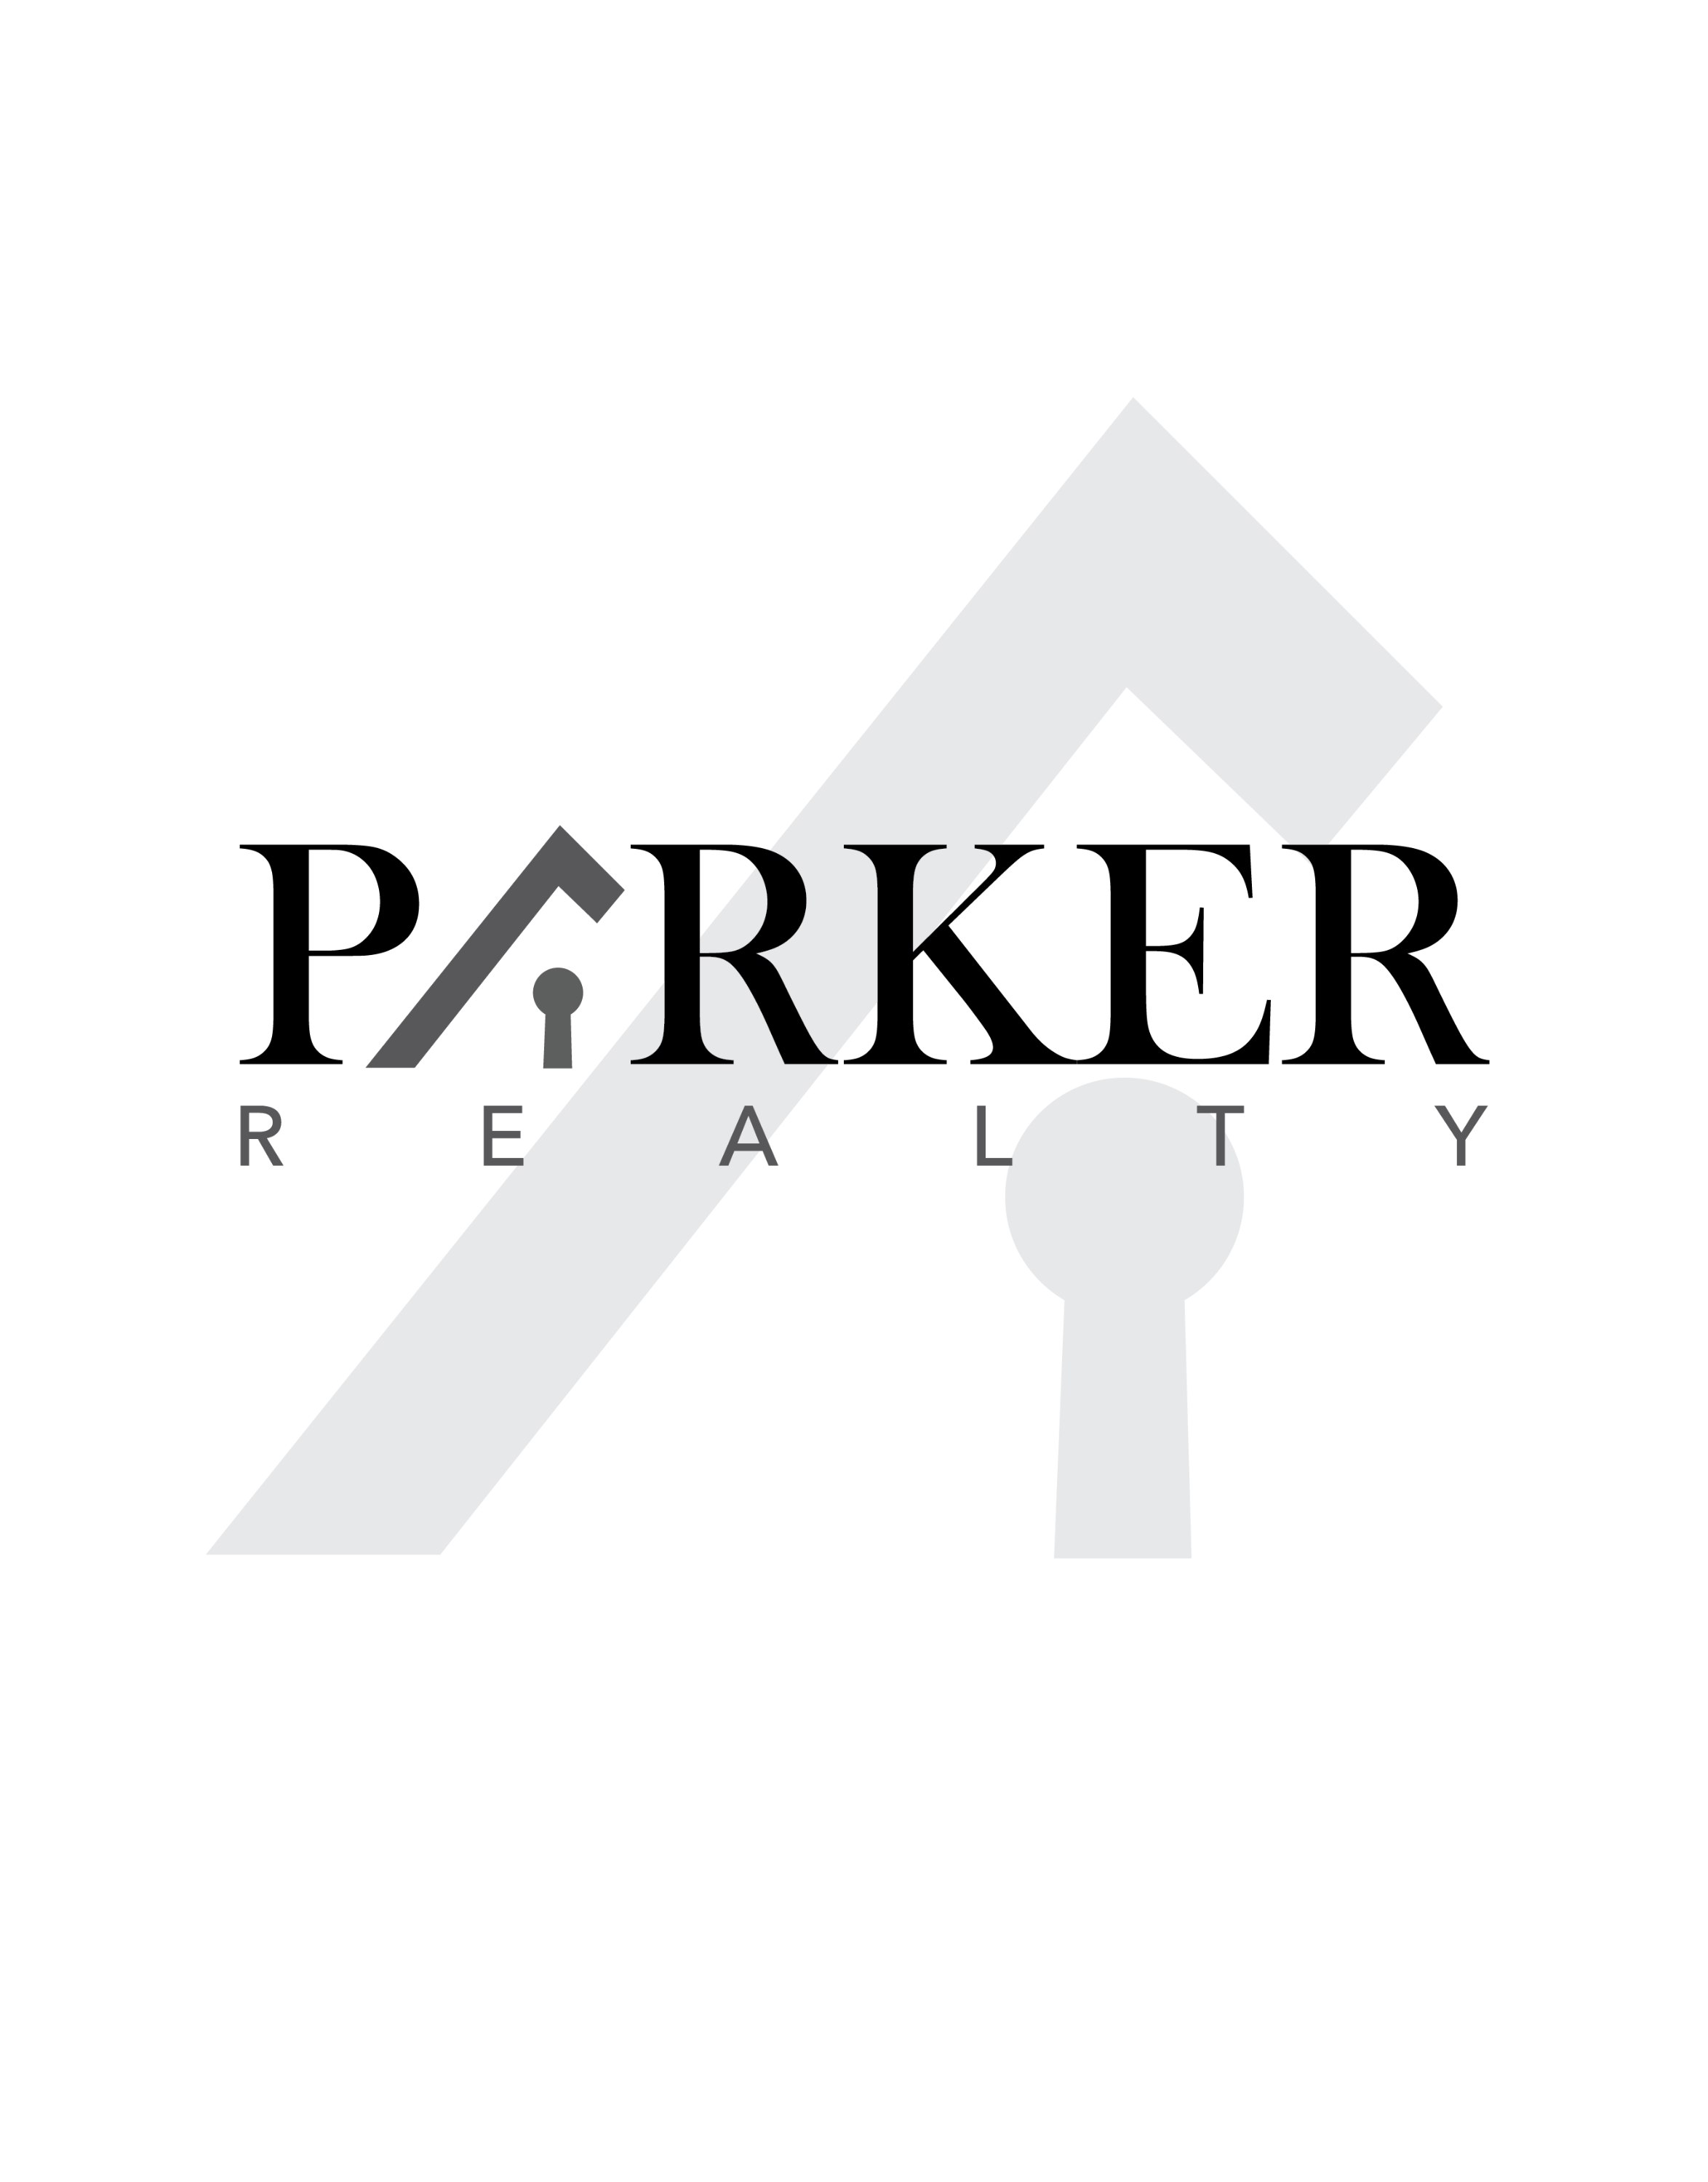 Parker Realty logo - new 2022